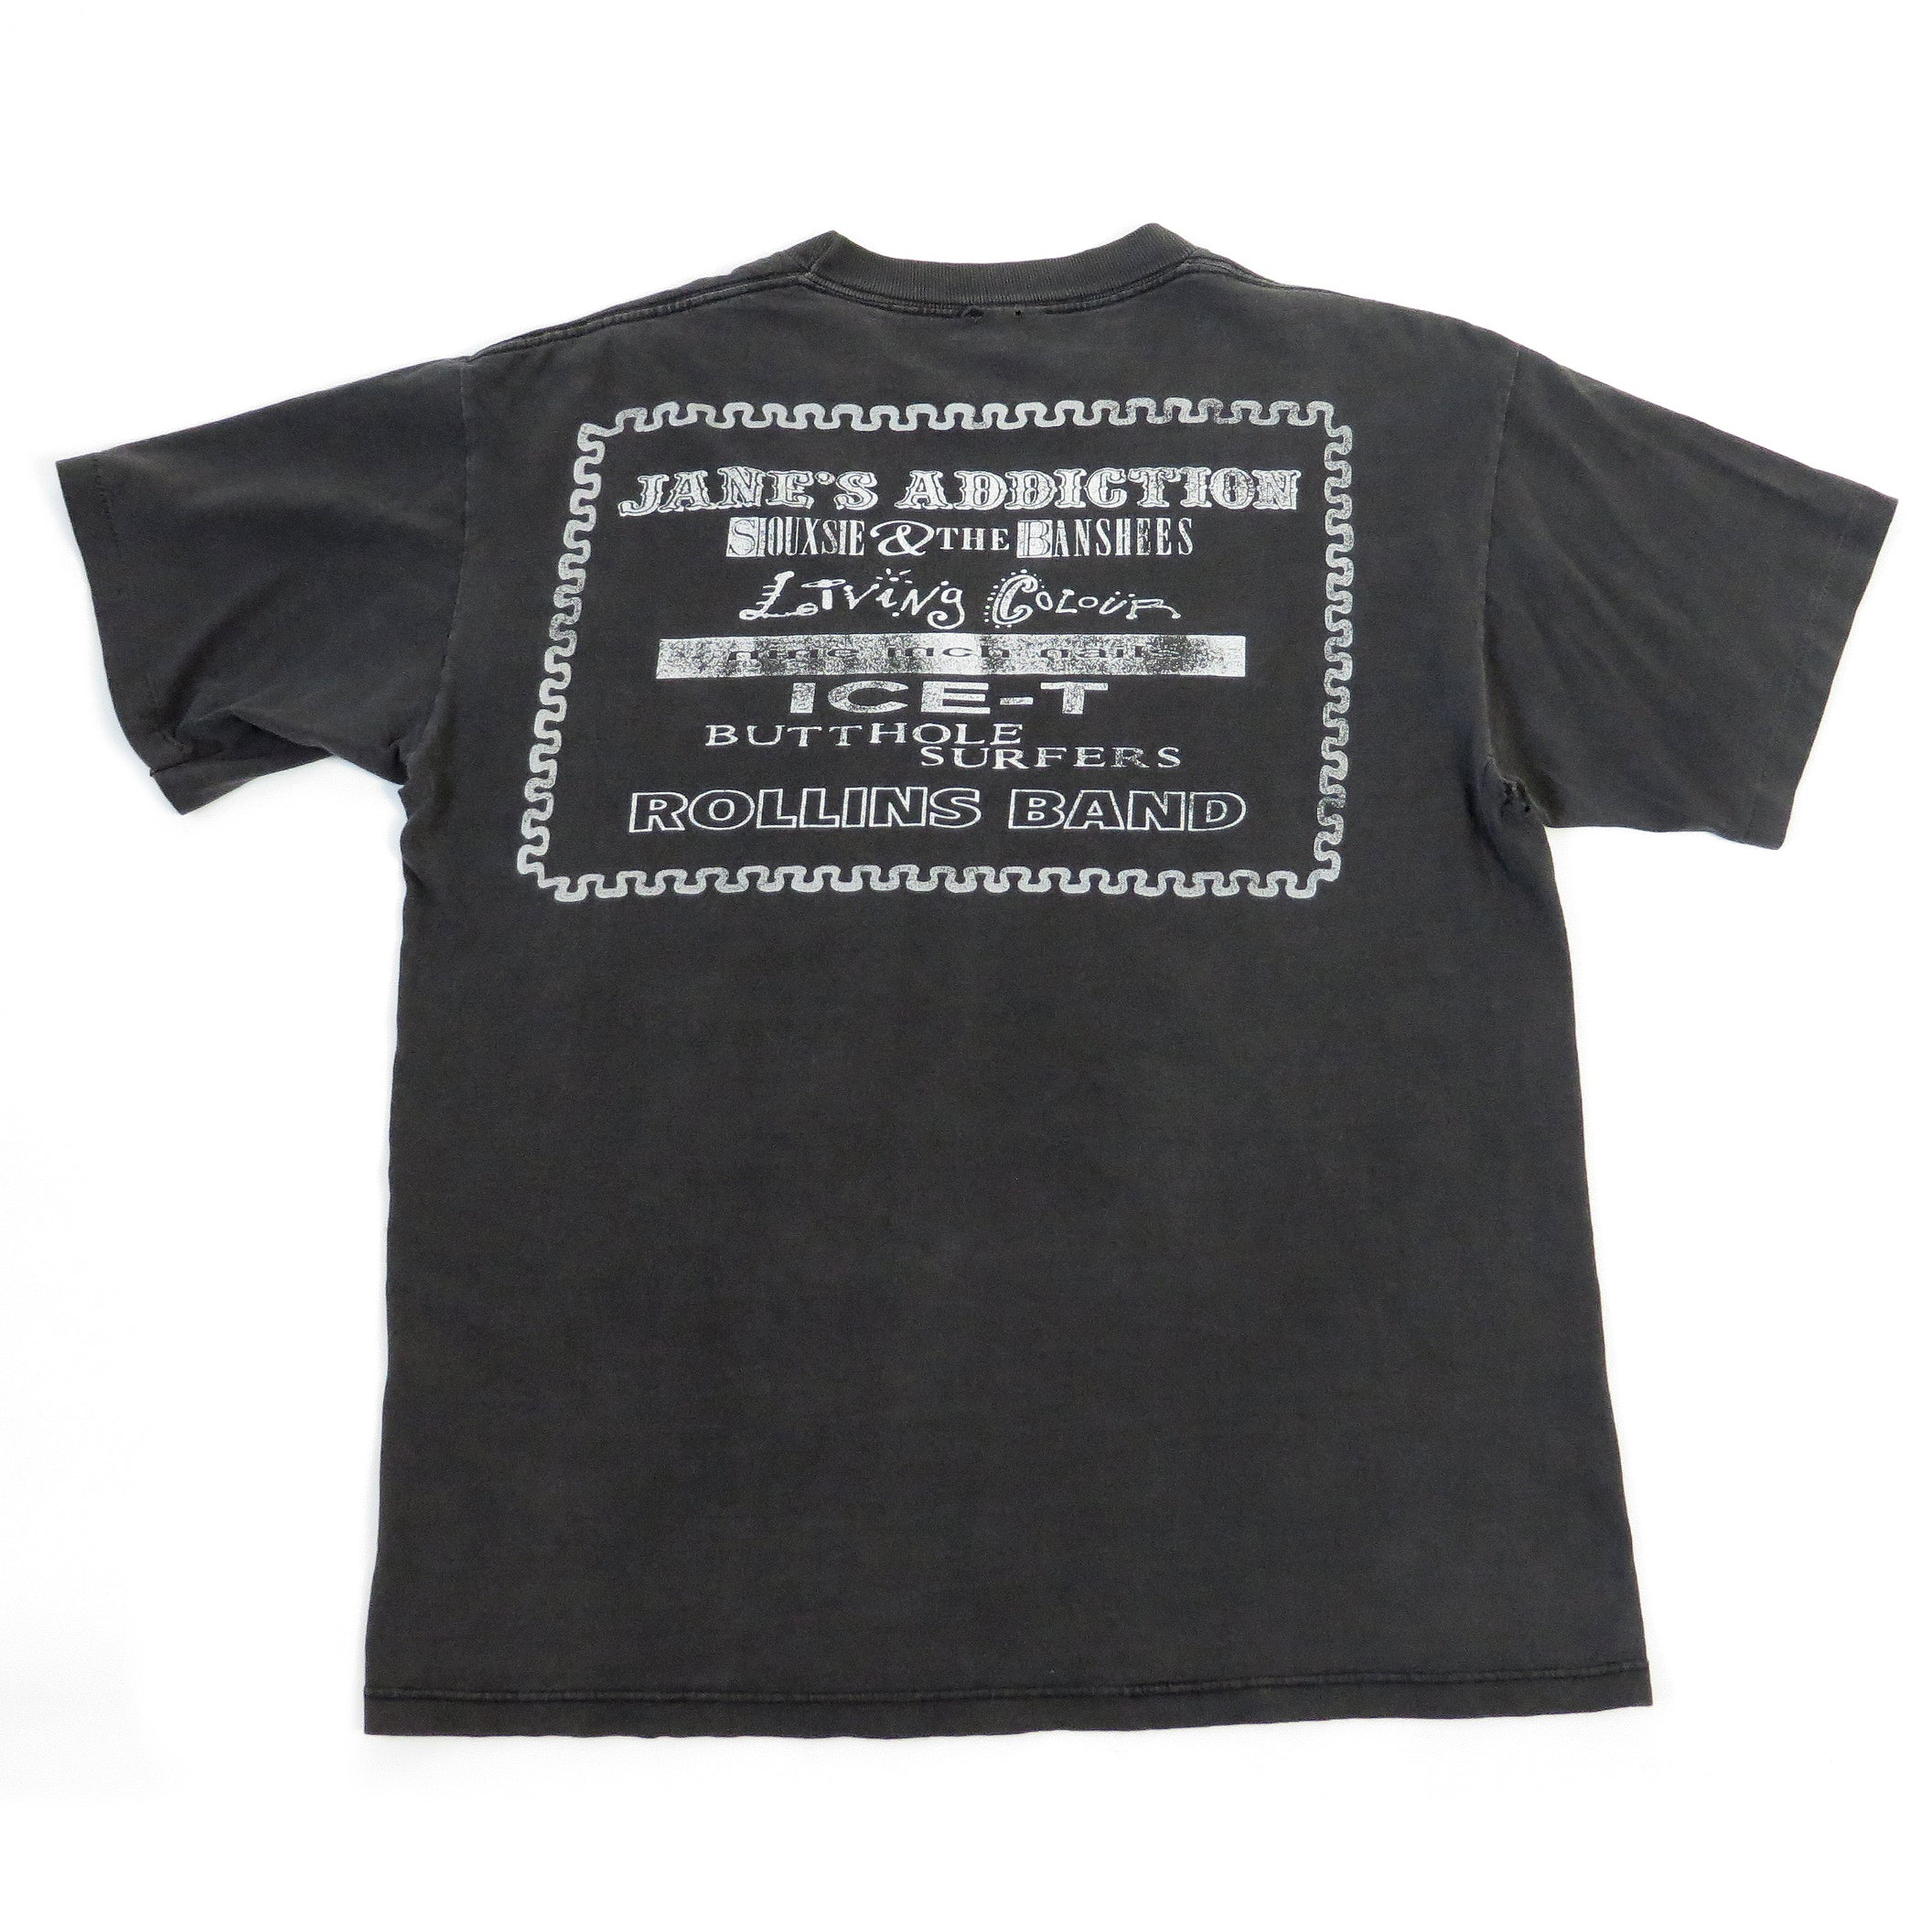 Vintage 1991 Lollapalooza T-Shirt Sz M